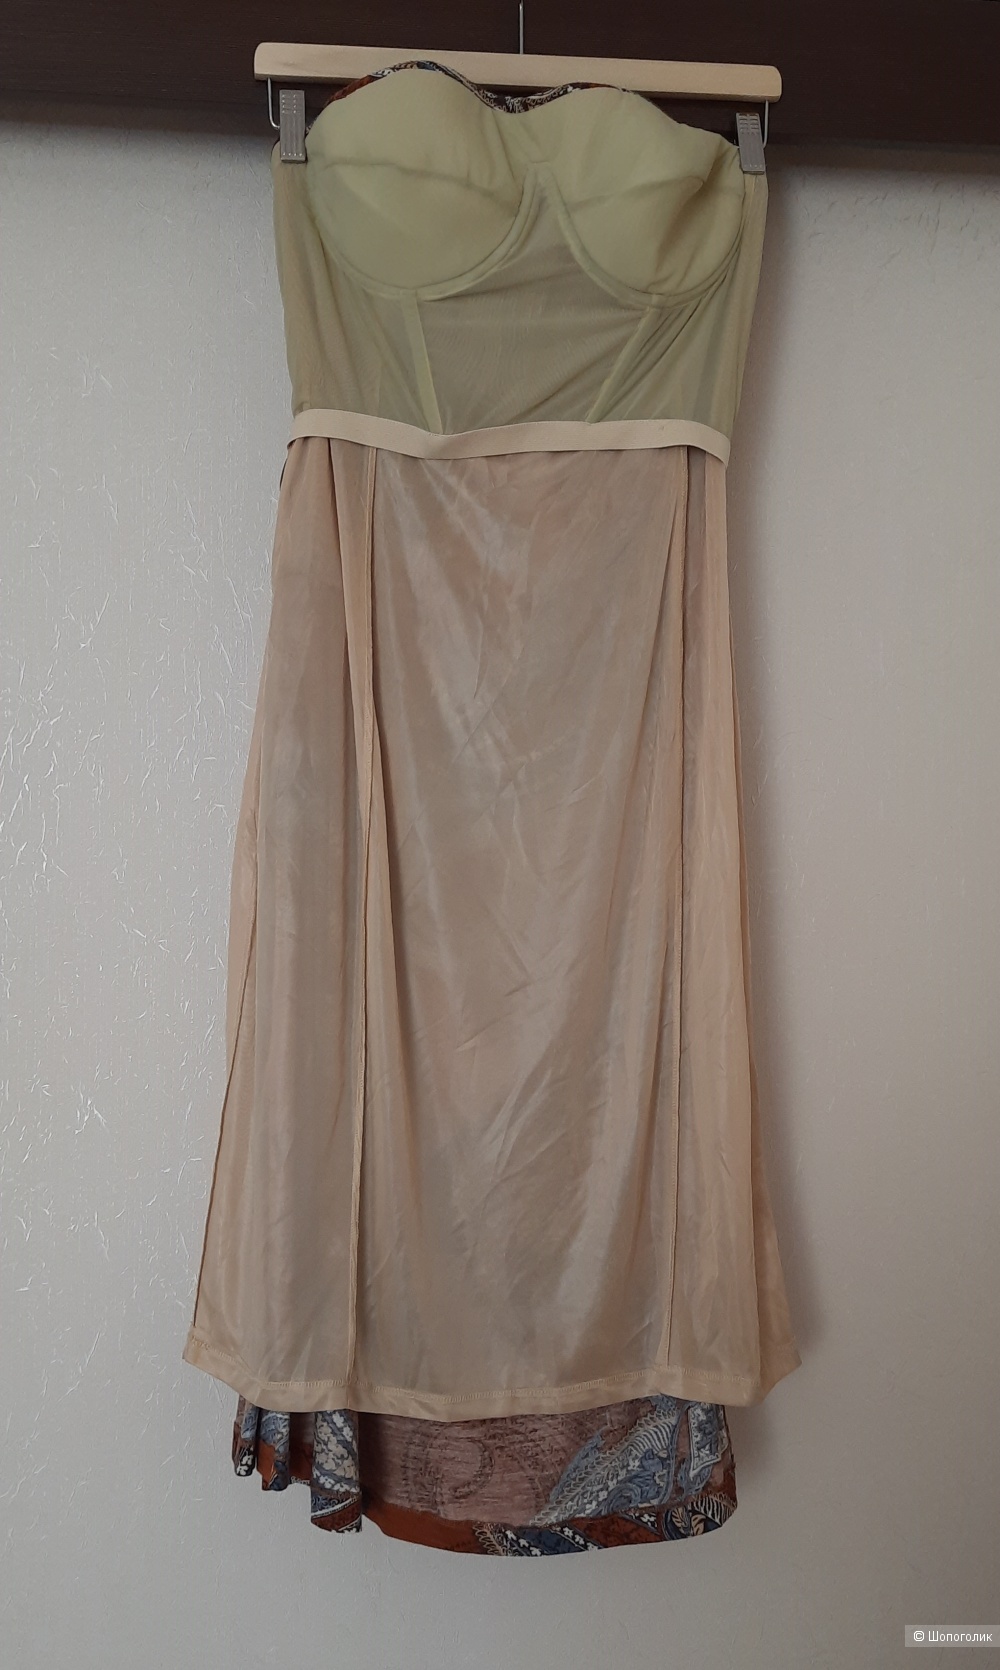 Платье-корсаж бренда «Маngo», размер XL